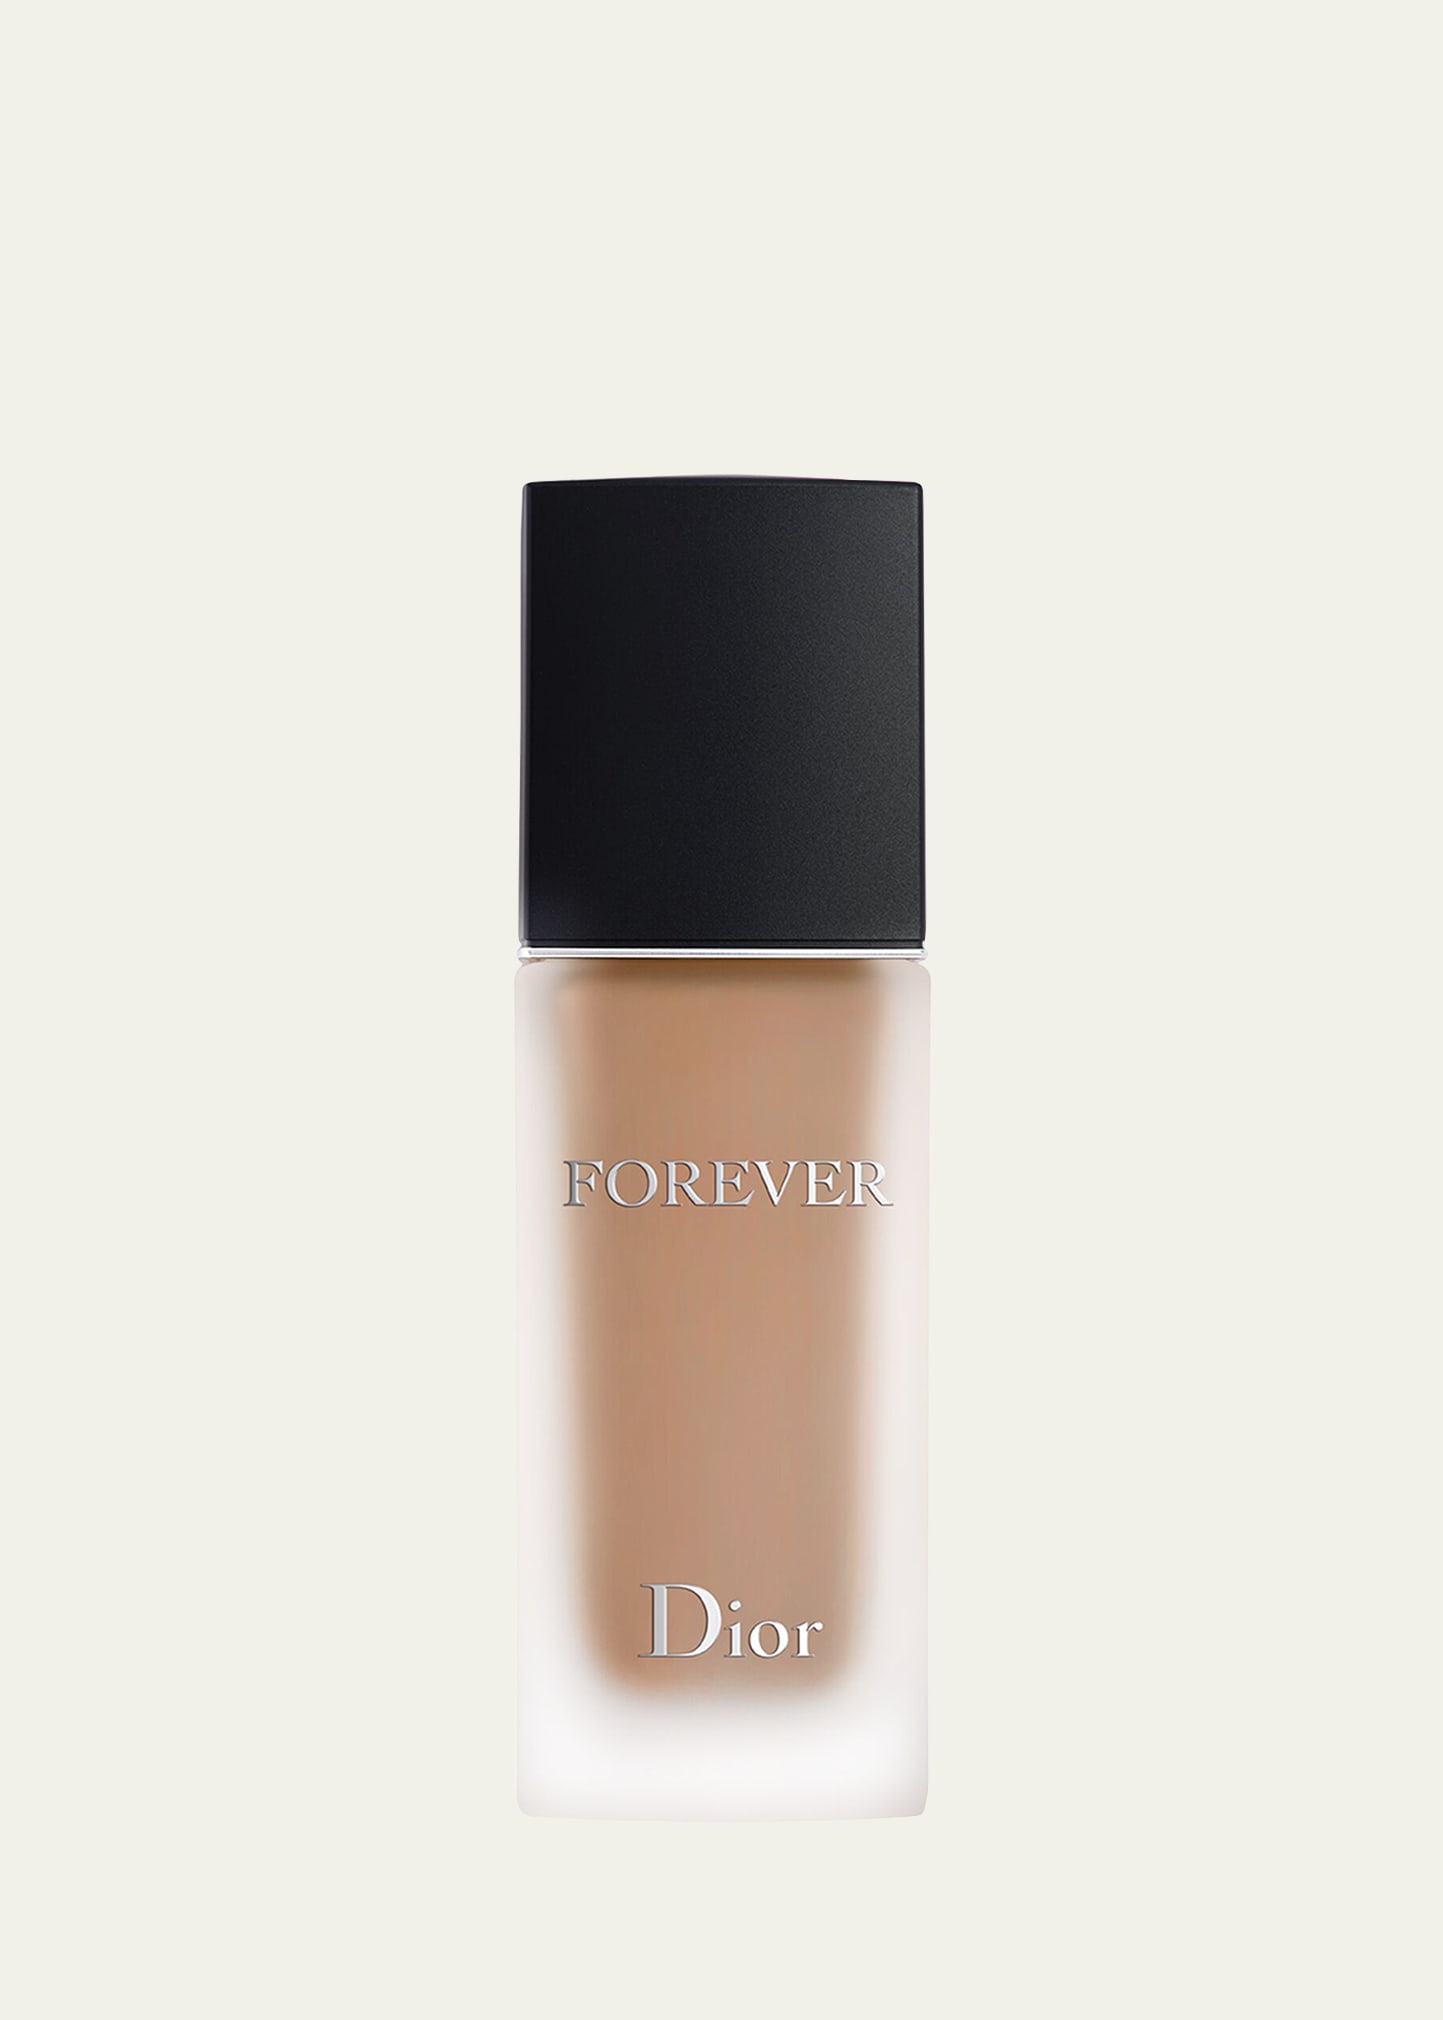 Dior 1 Oz. Forever Matte Skincare Foundation Spf 15 In 4 Cool